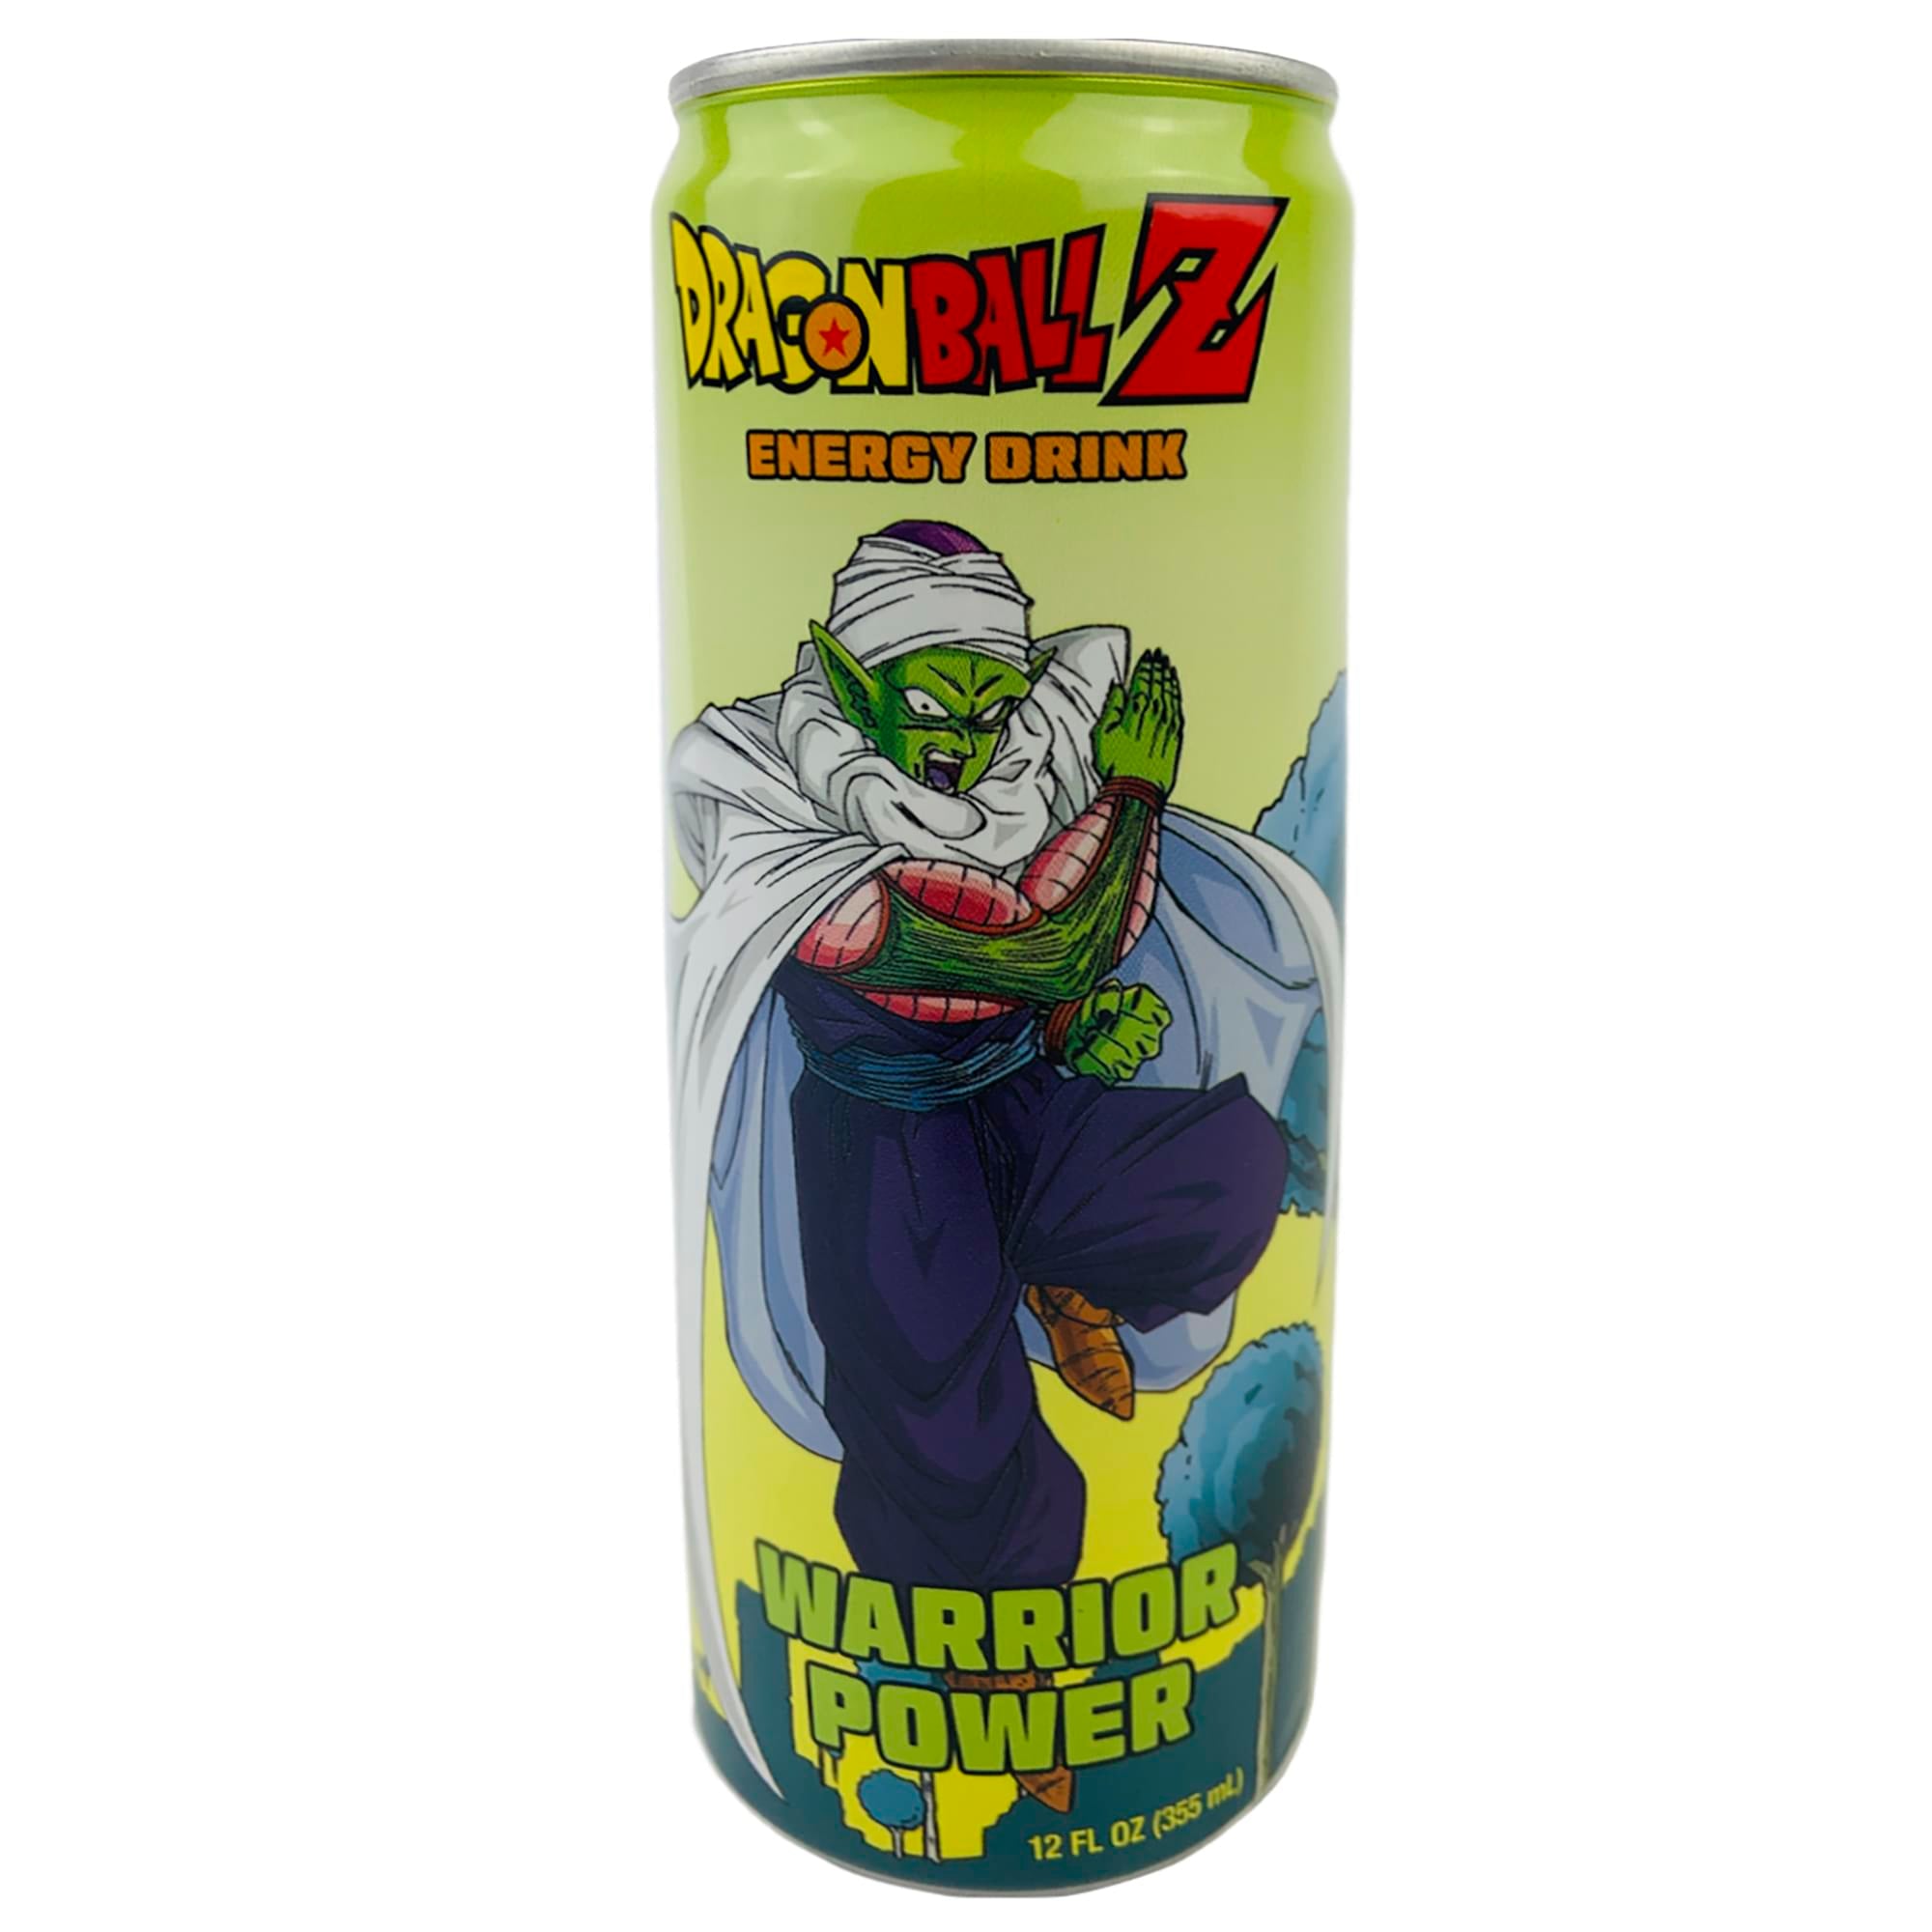 Dragon Ball Z Warrior Power 12oz Energy Drink , 1 Can